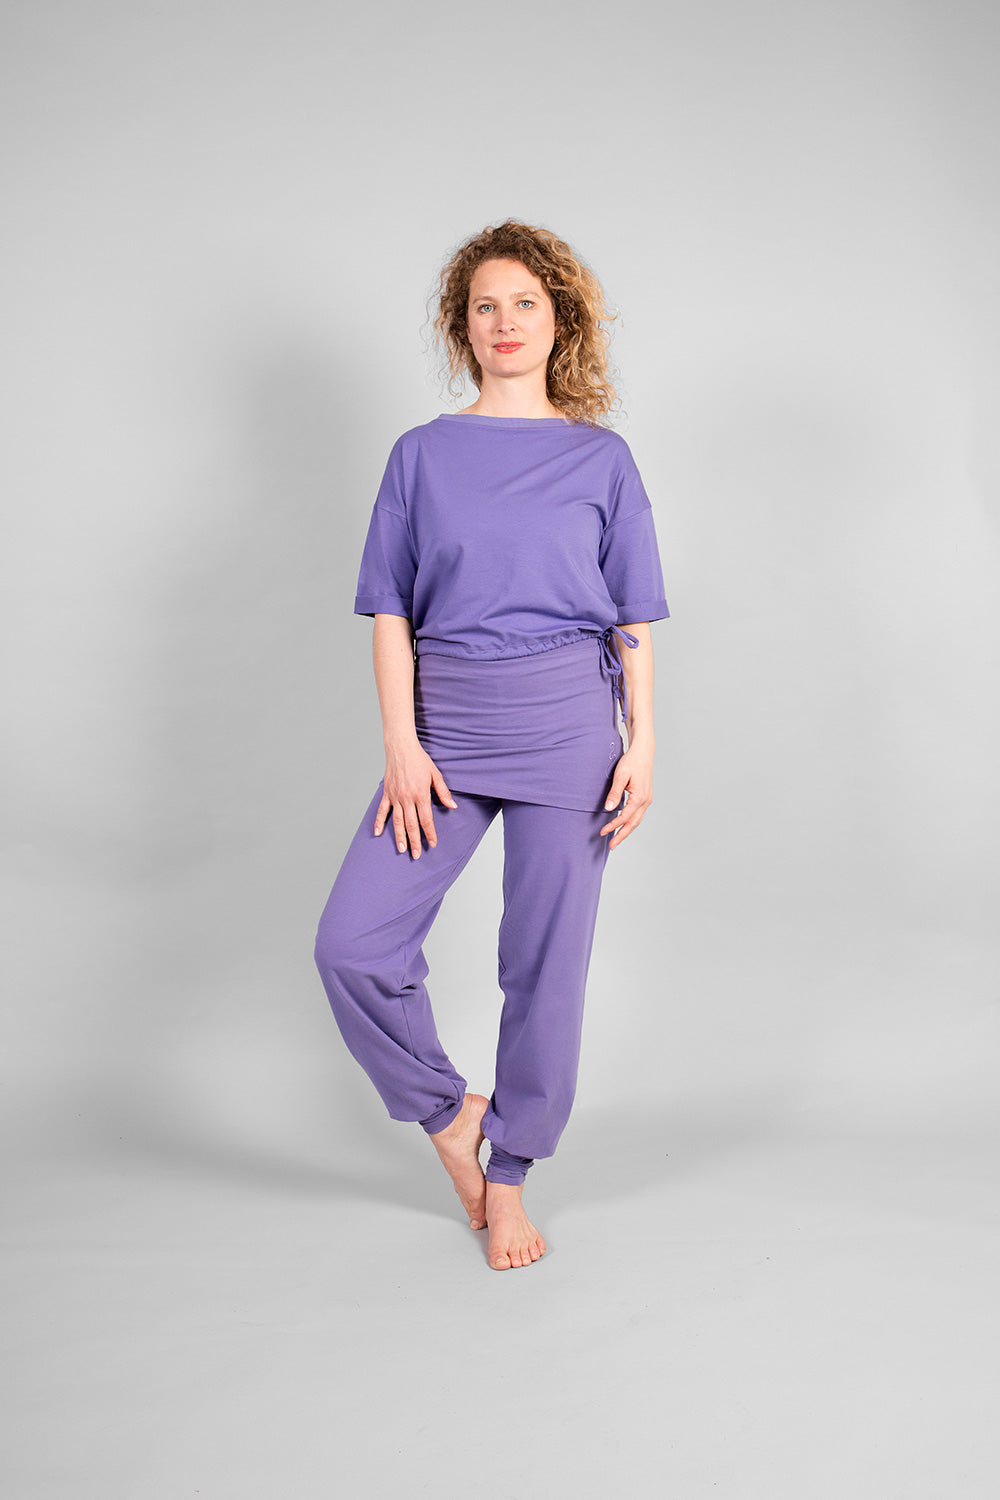 Lilii Women's Loose Fit Pants, Dark purple